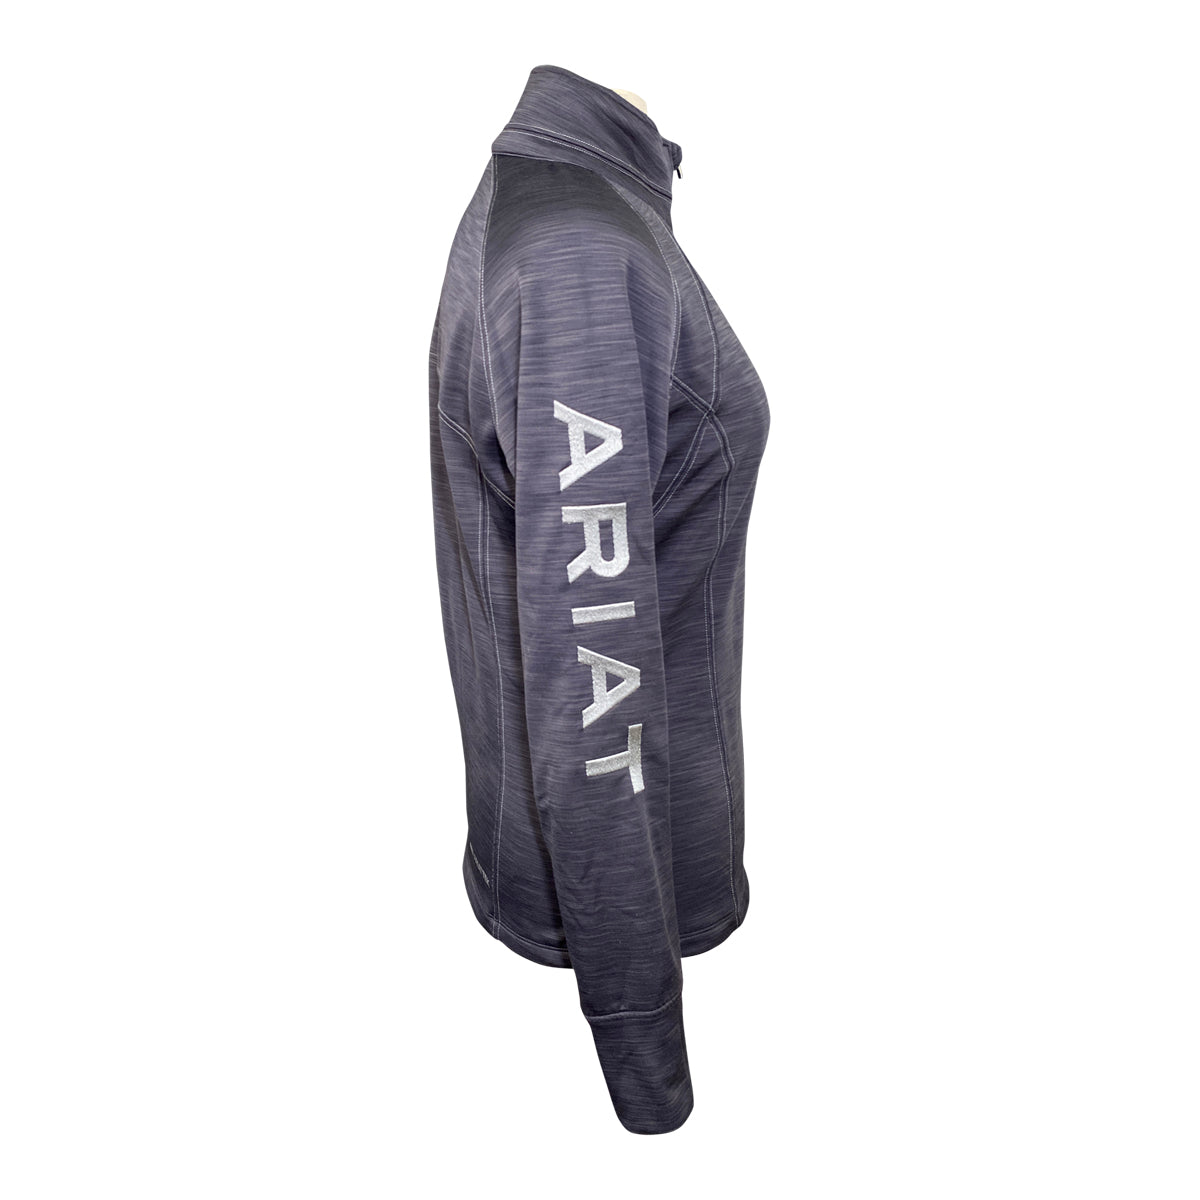 AriatTek 'Team' 1/2 Zip Sweatshirt in Dark Heather Grey